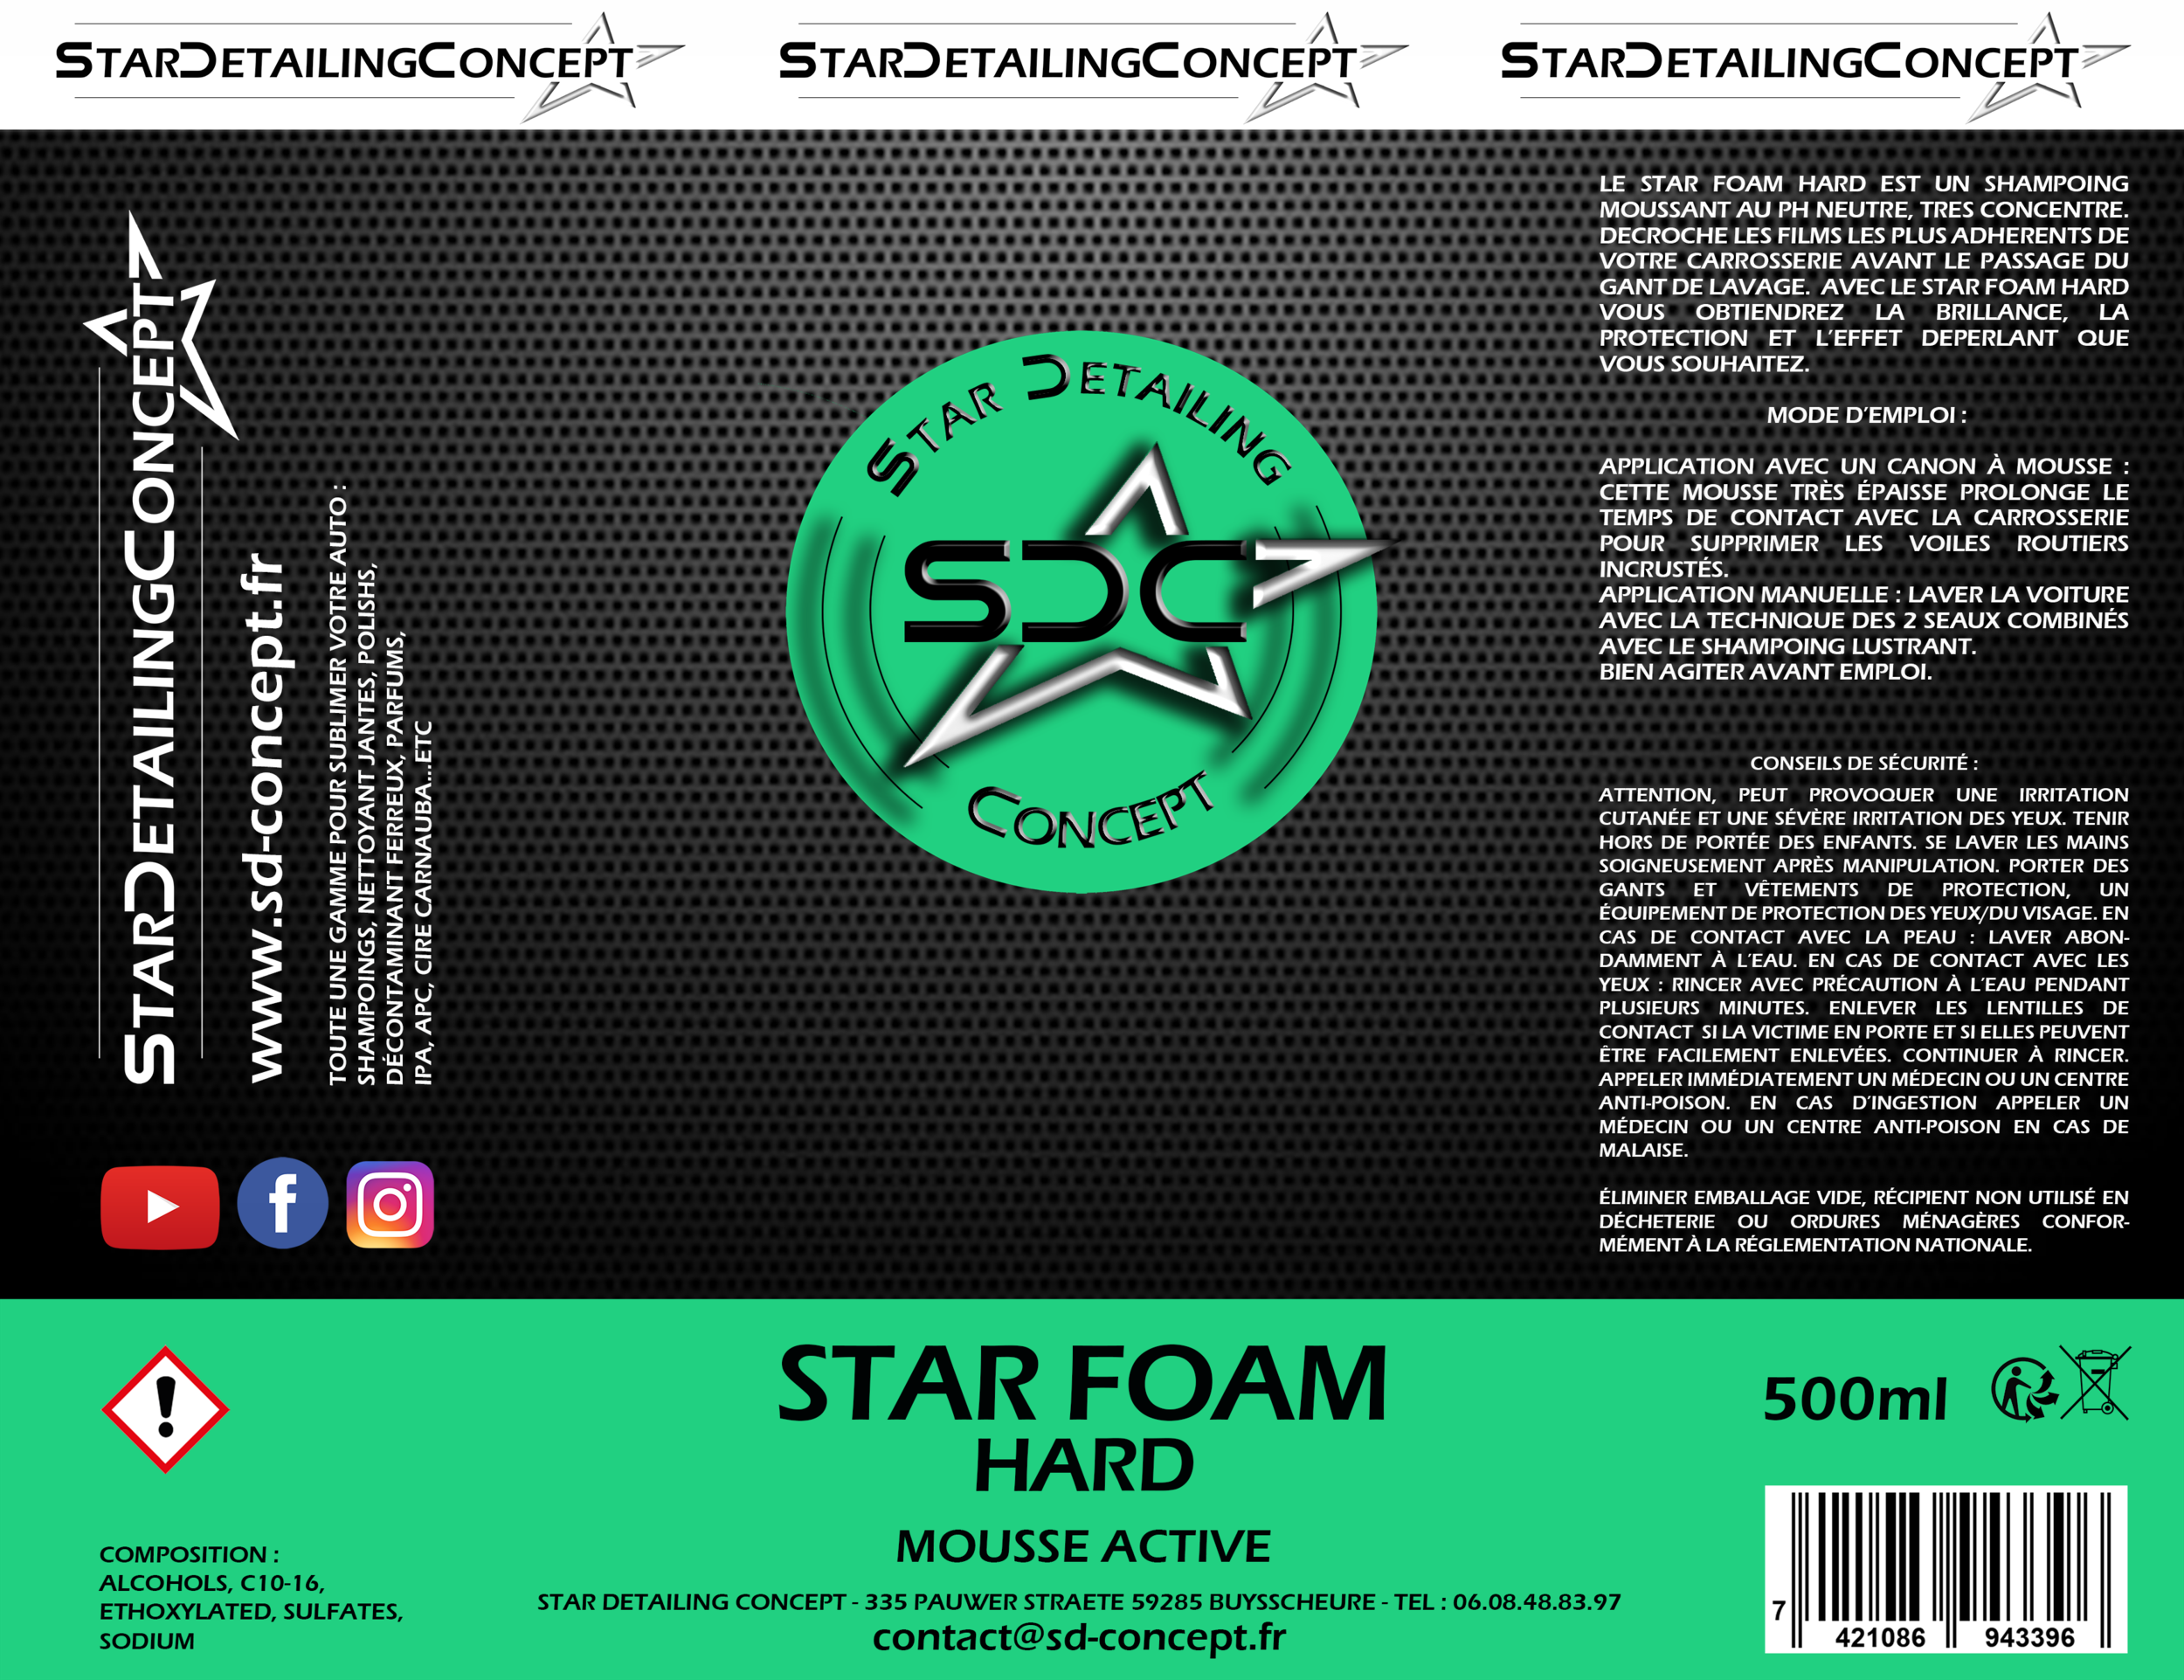 5 STAR FOAM HARD OK 25 04 21